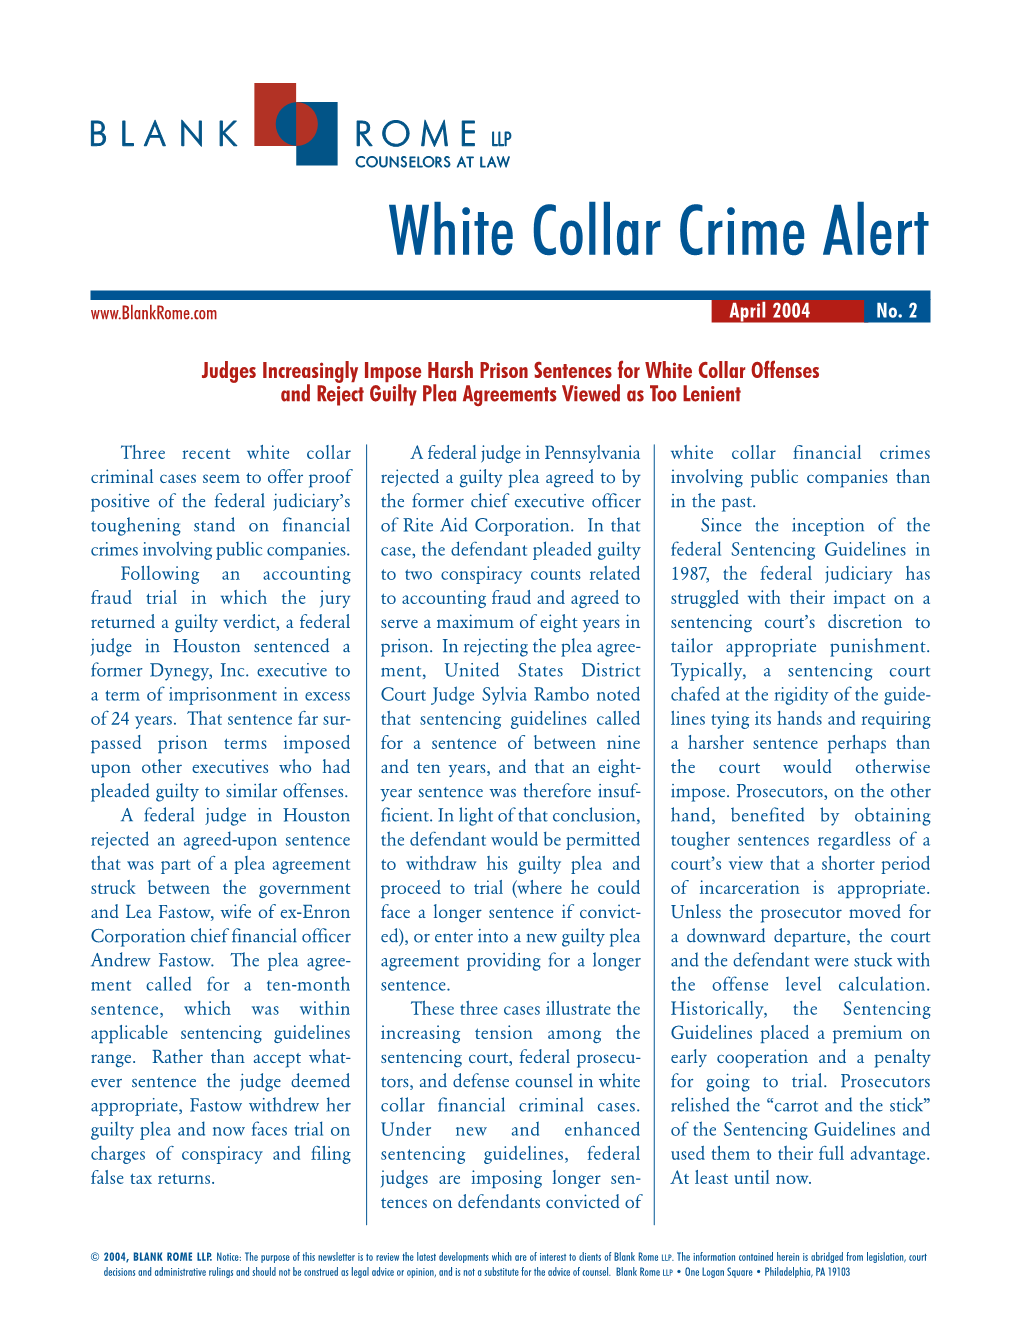 White Collar Crime Update